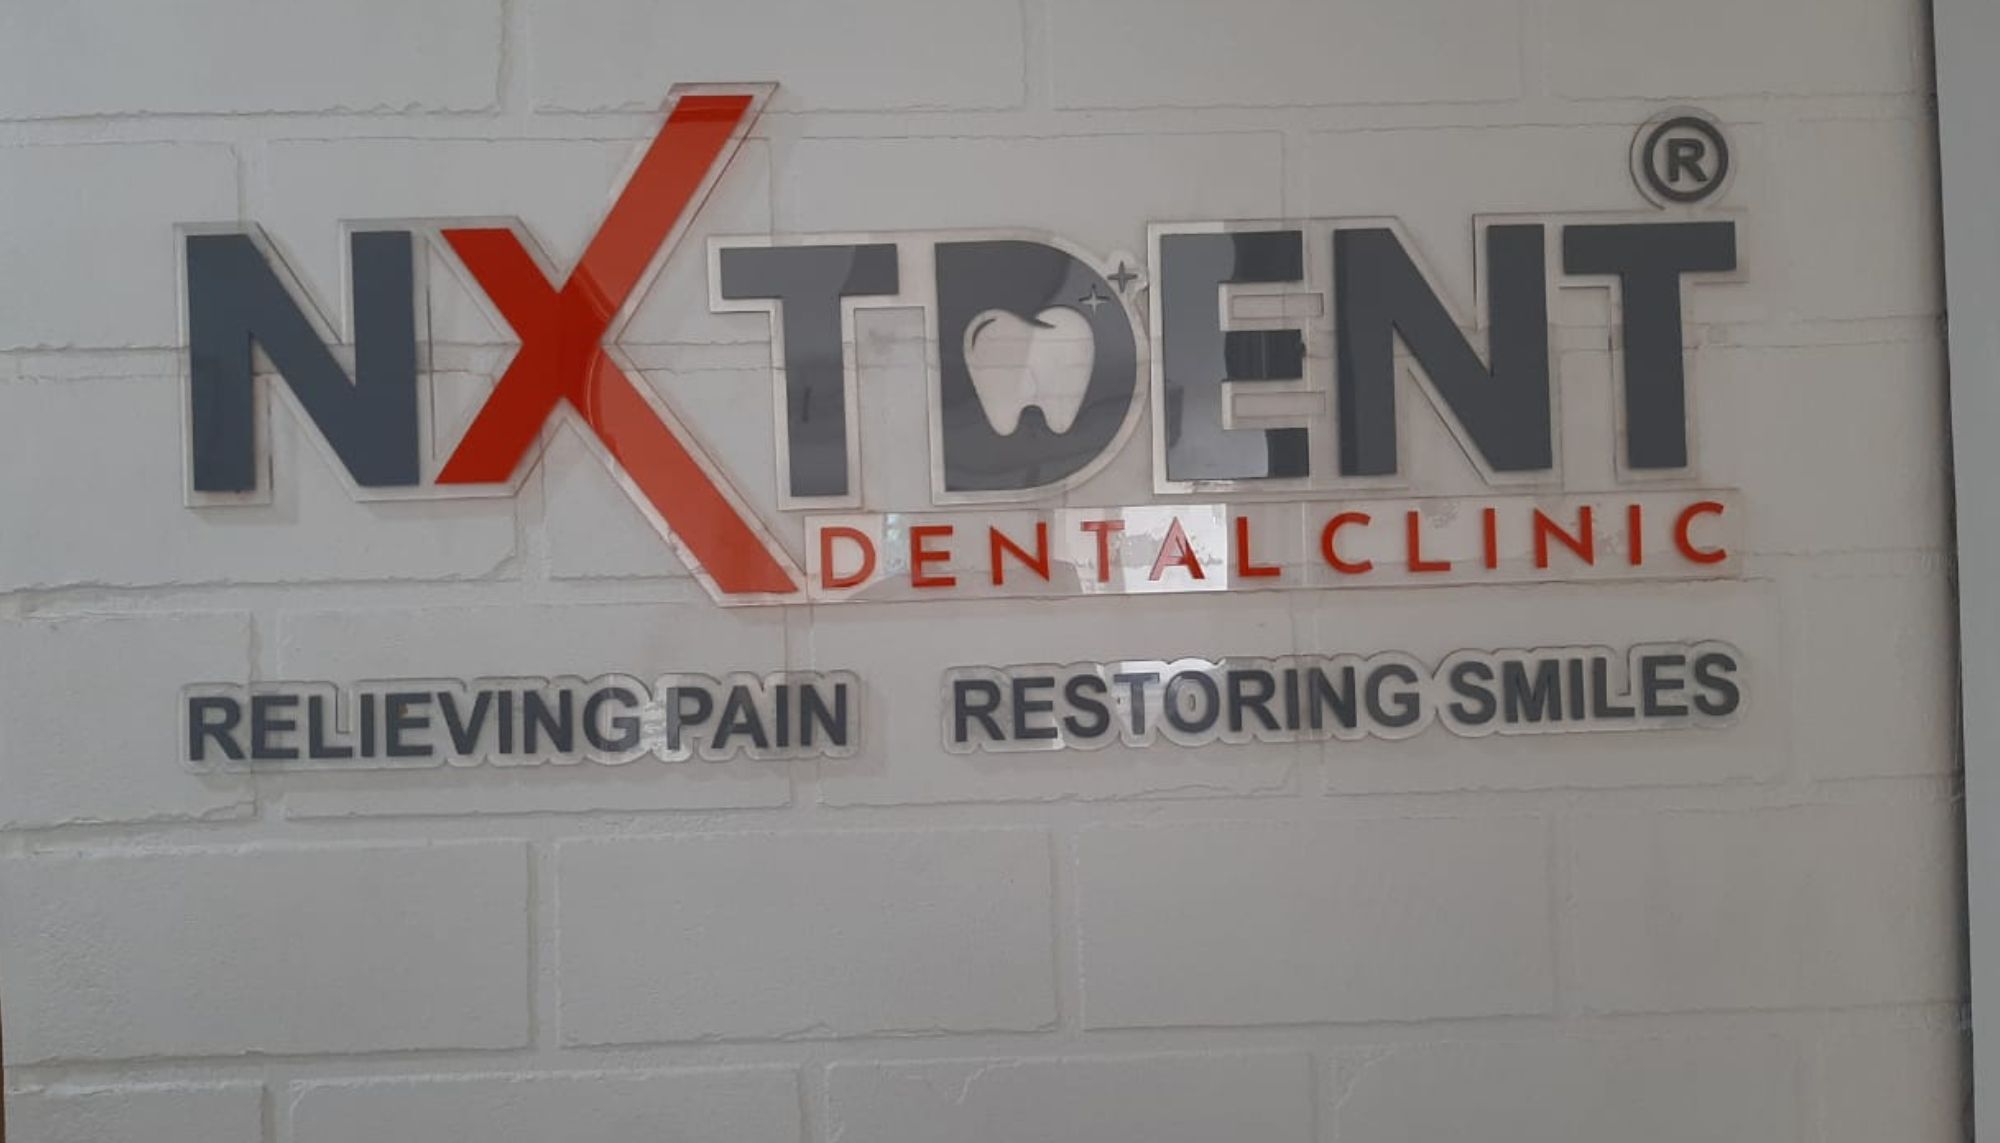 Our Happy Customer@ NXTDENT Dental Clinic